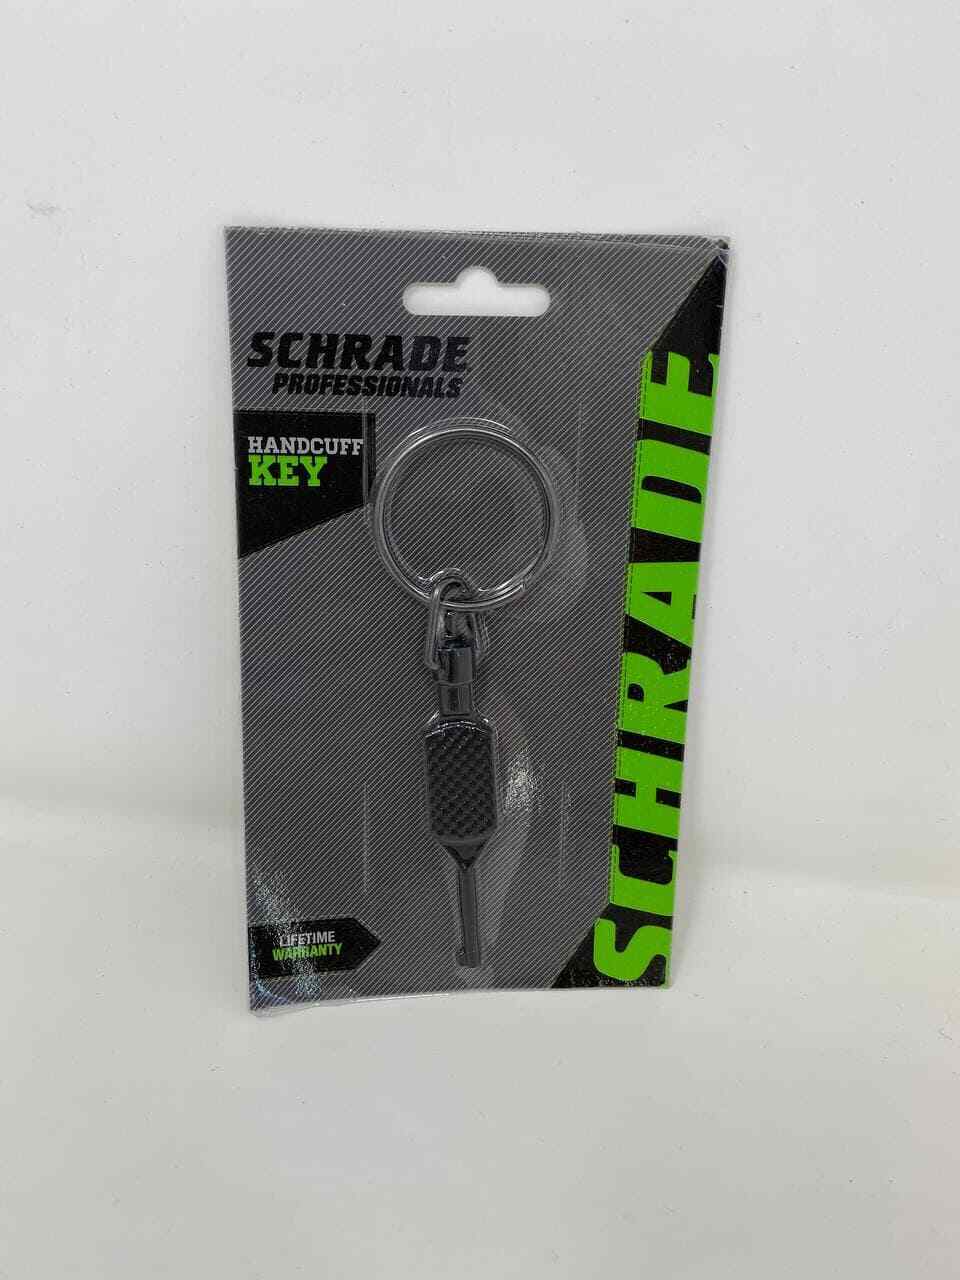 New Schrade Professional Series Handcuff Key Holder Sckey4